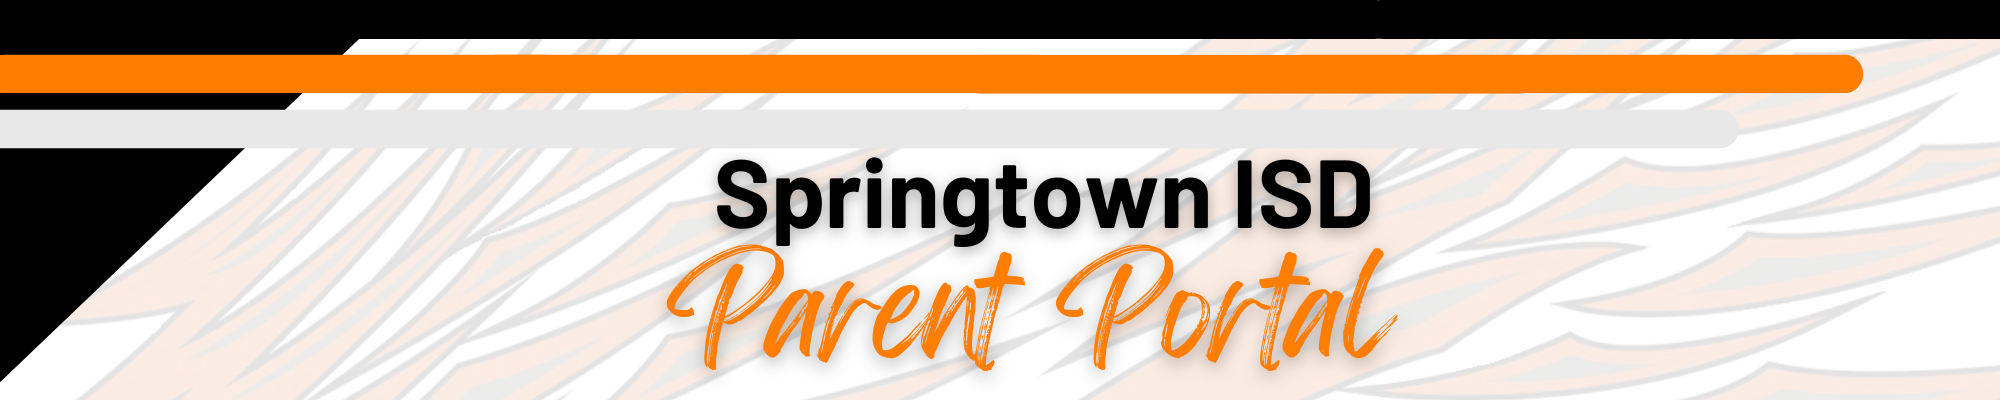 Springtown ISD Parent Portal Banner